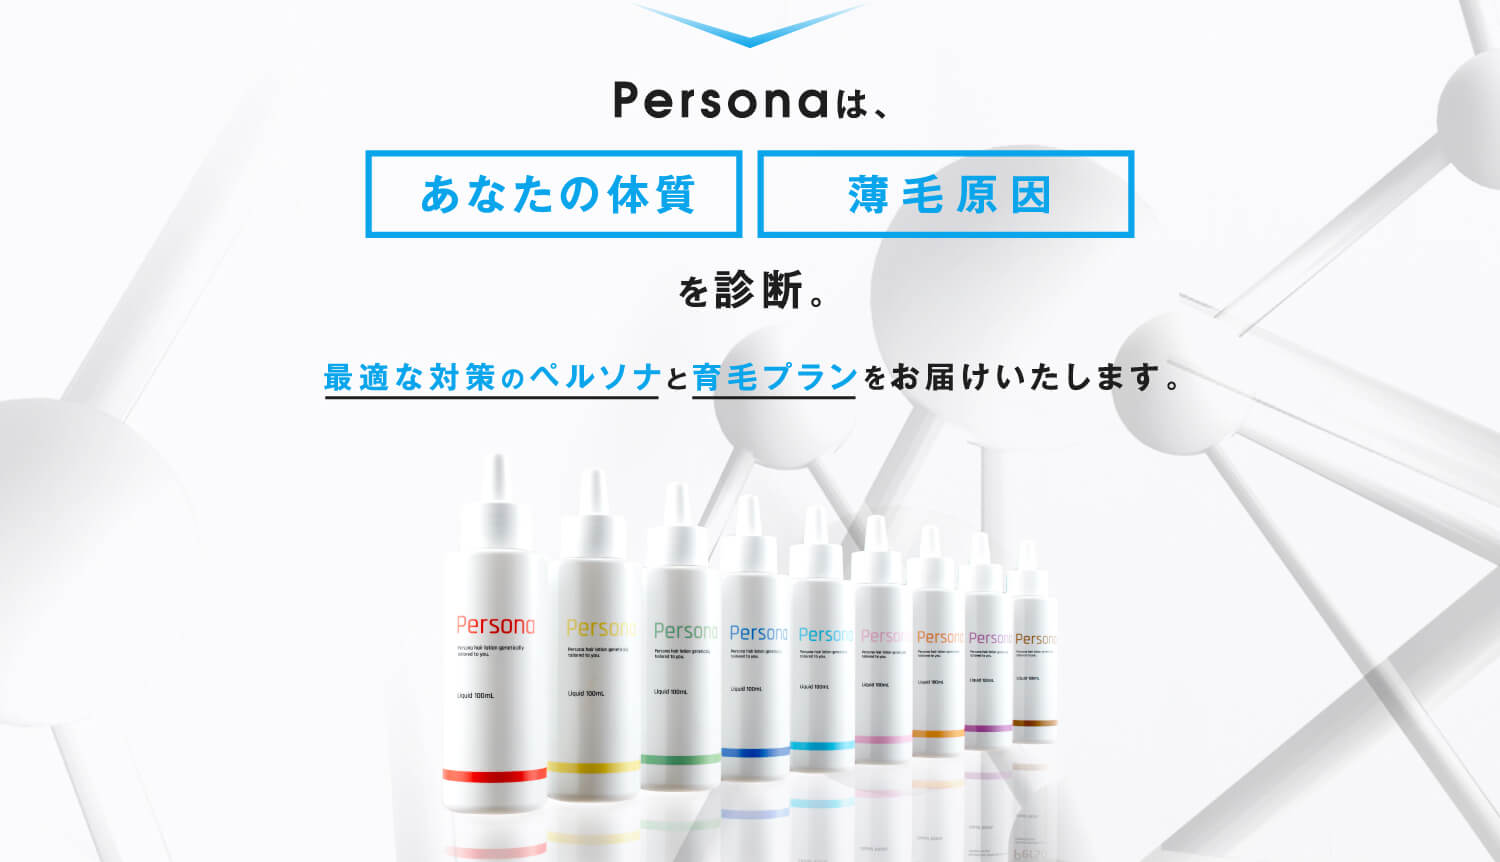 Personaは、あなたの体質＋薄毛原因を診断。